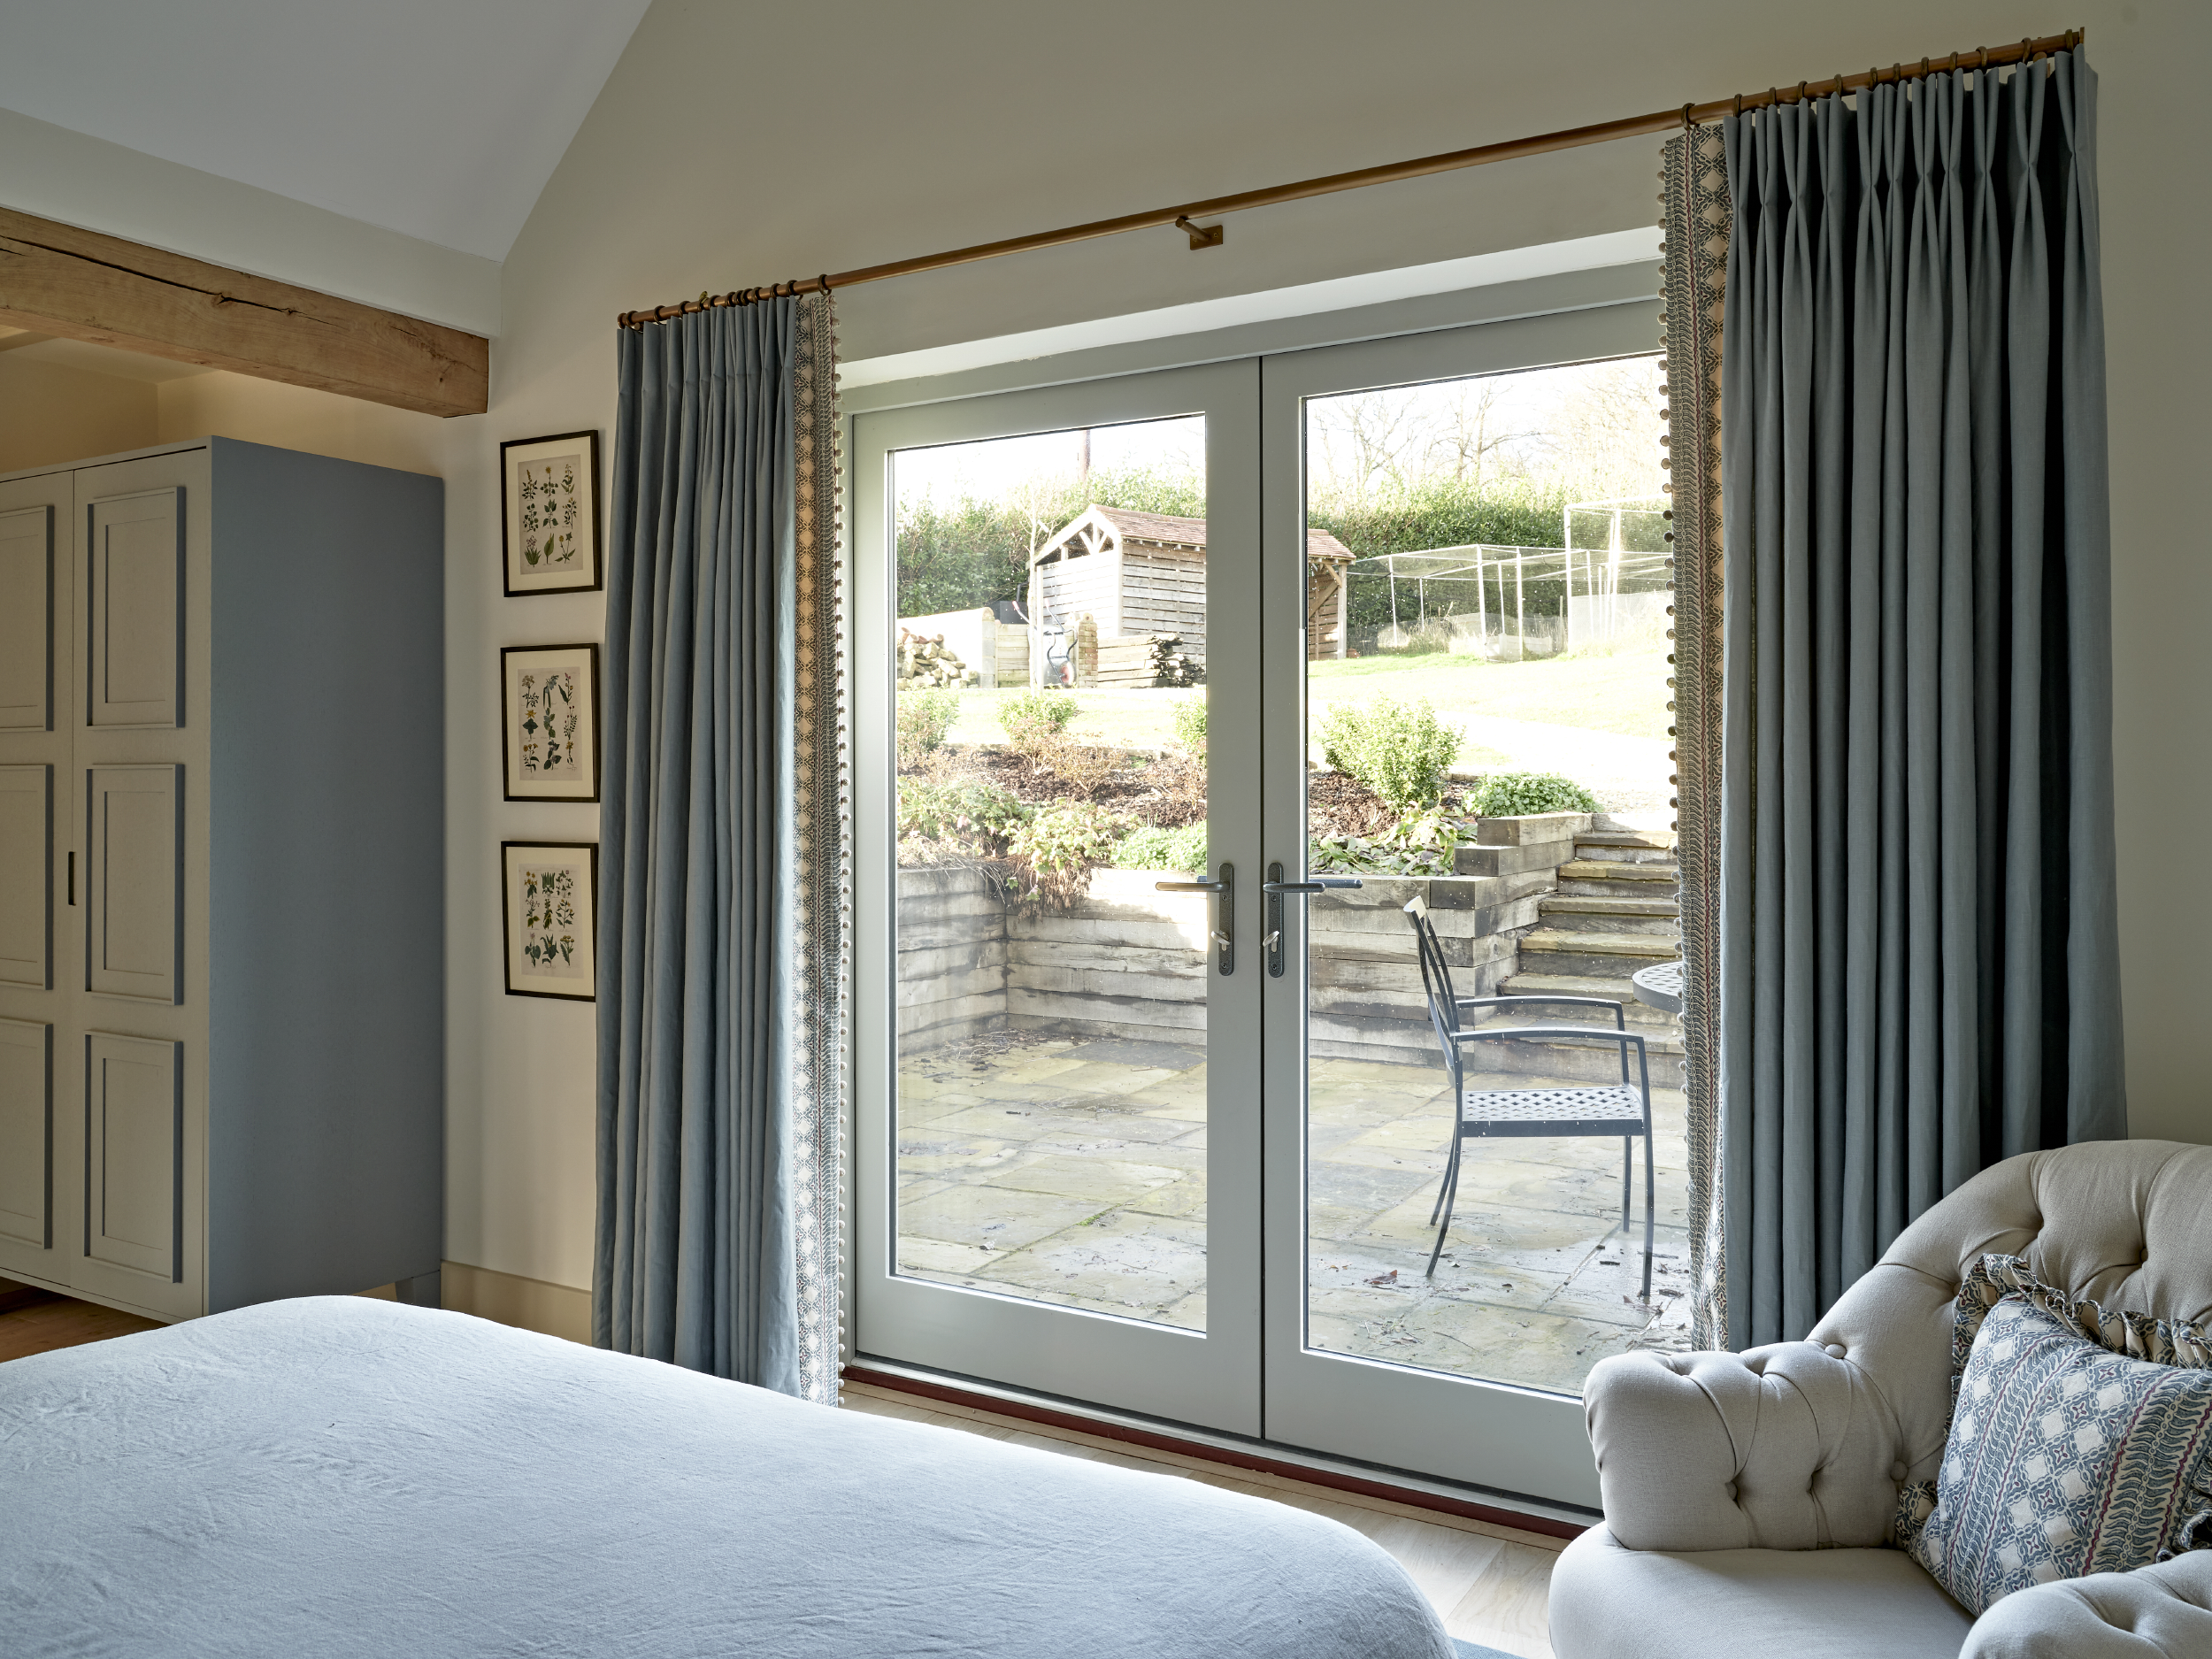 Bedroom Modern Country Interior Design Sussex